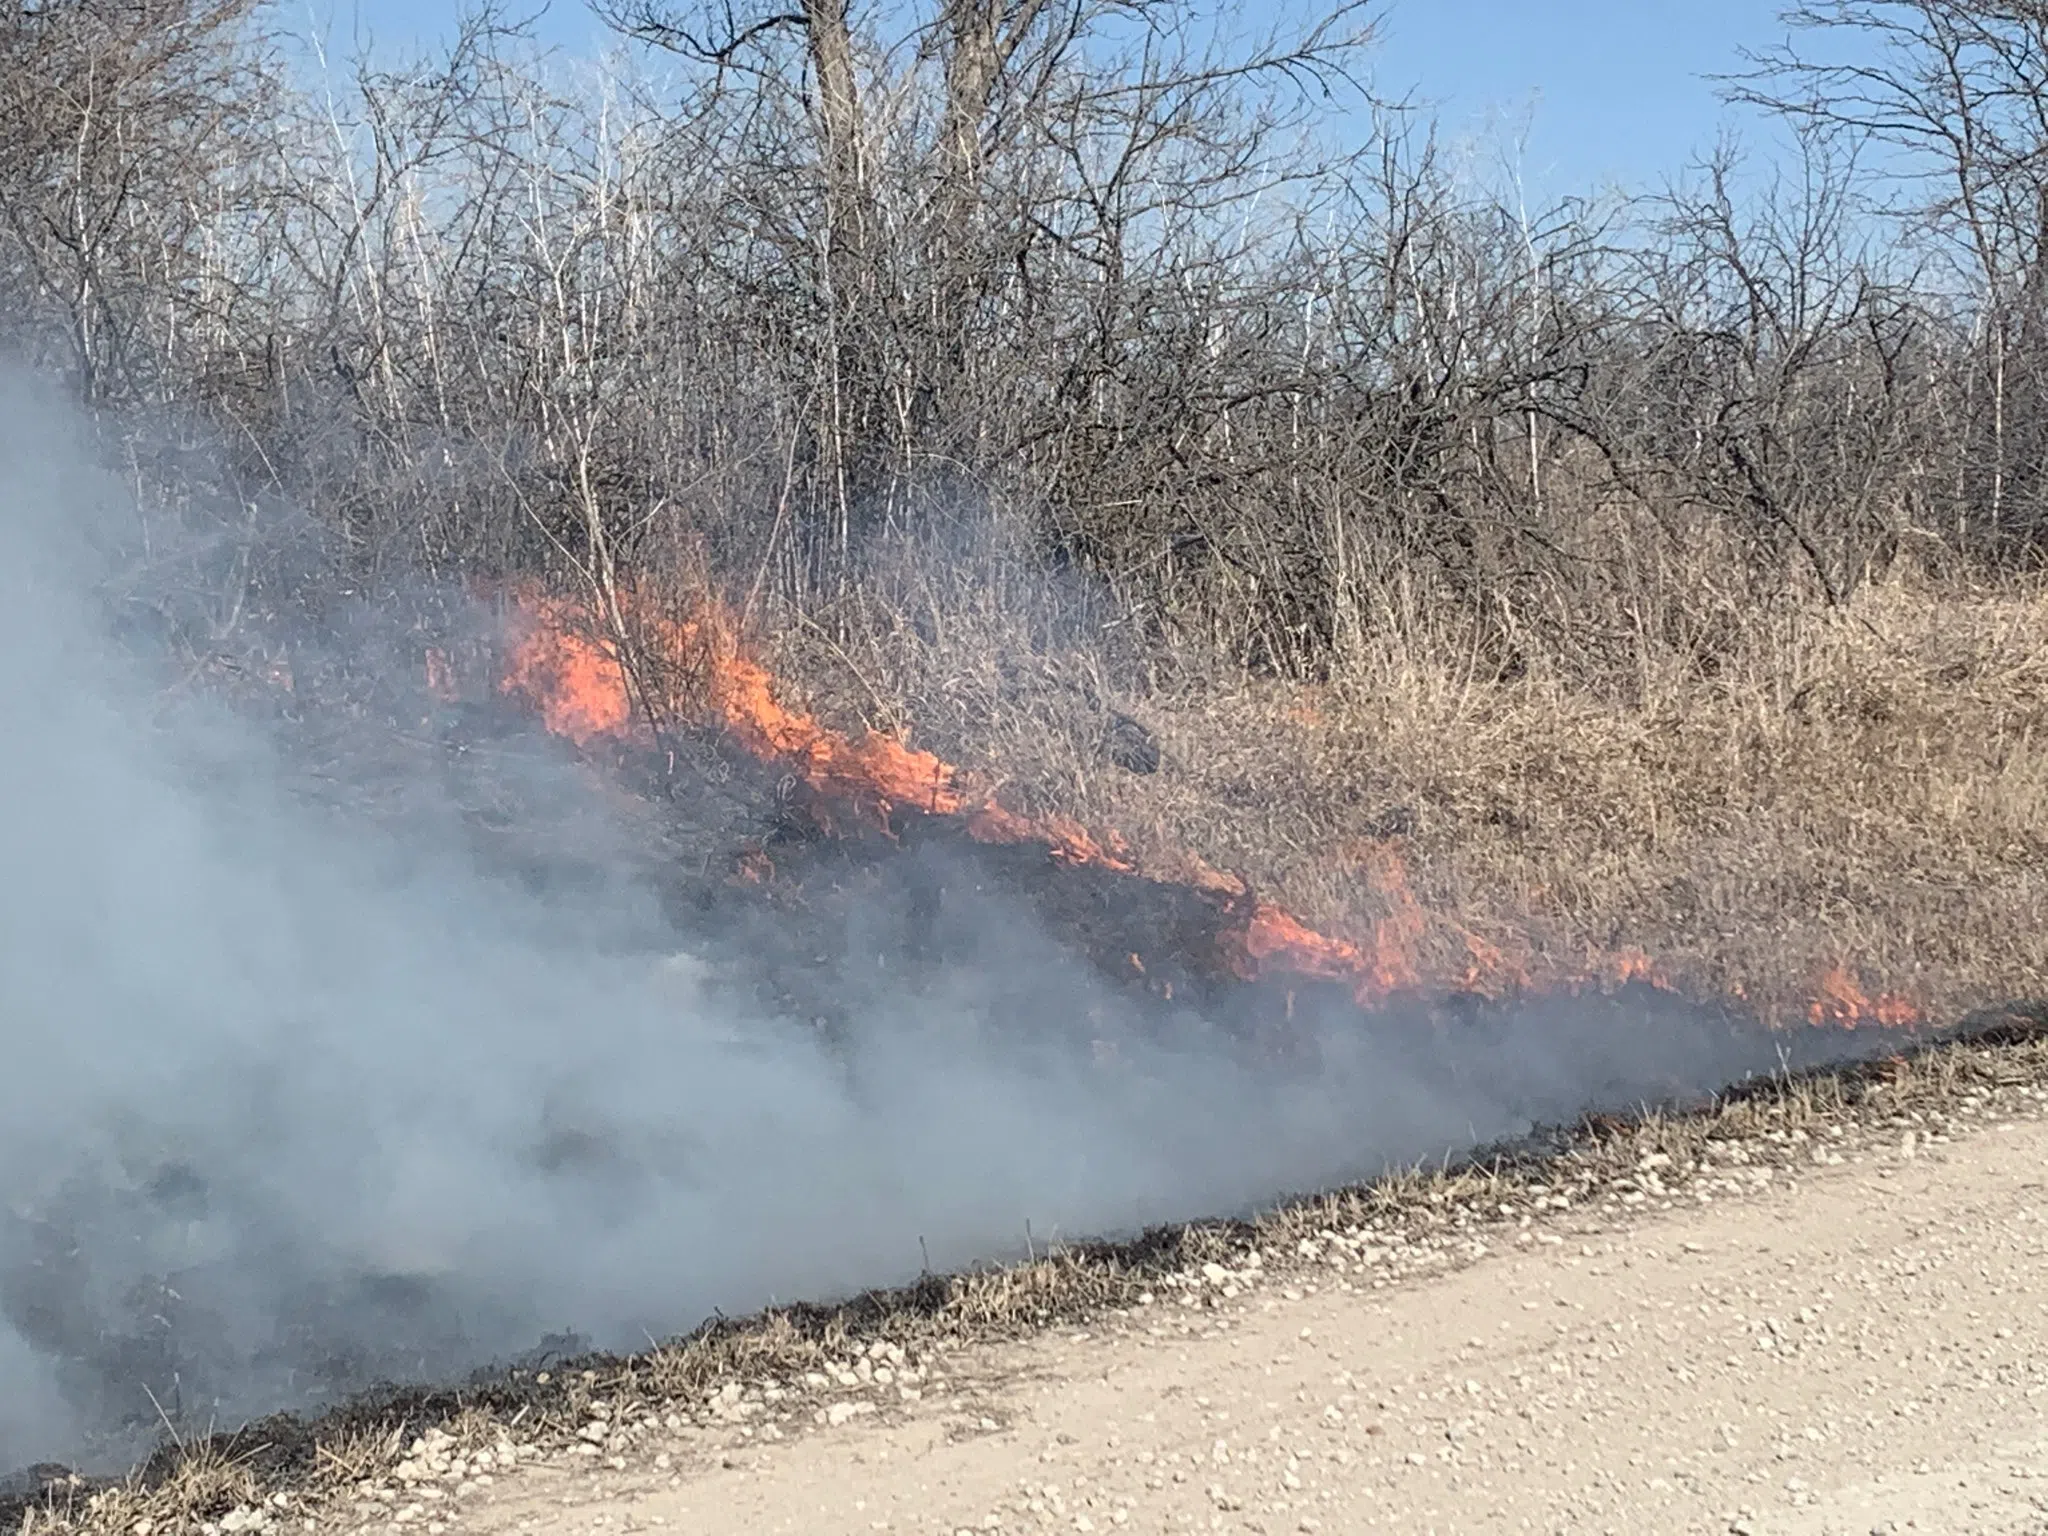 Controlled burn activity still increasing across Flint Hills